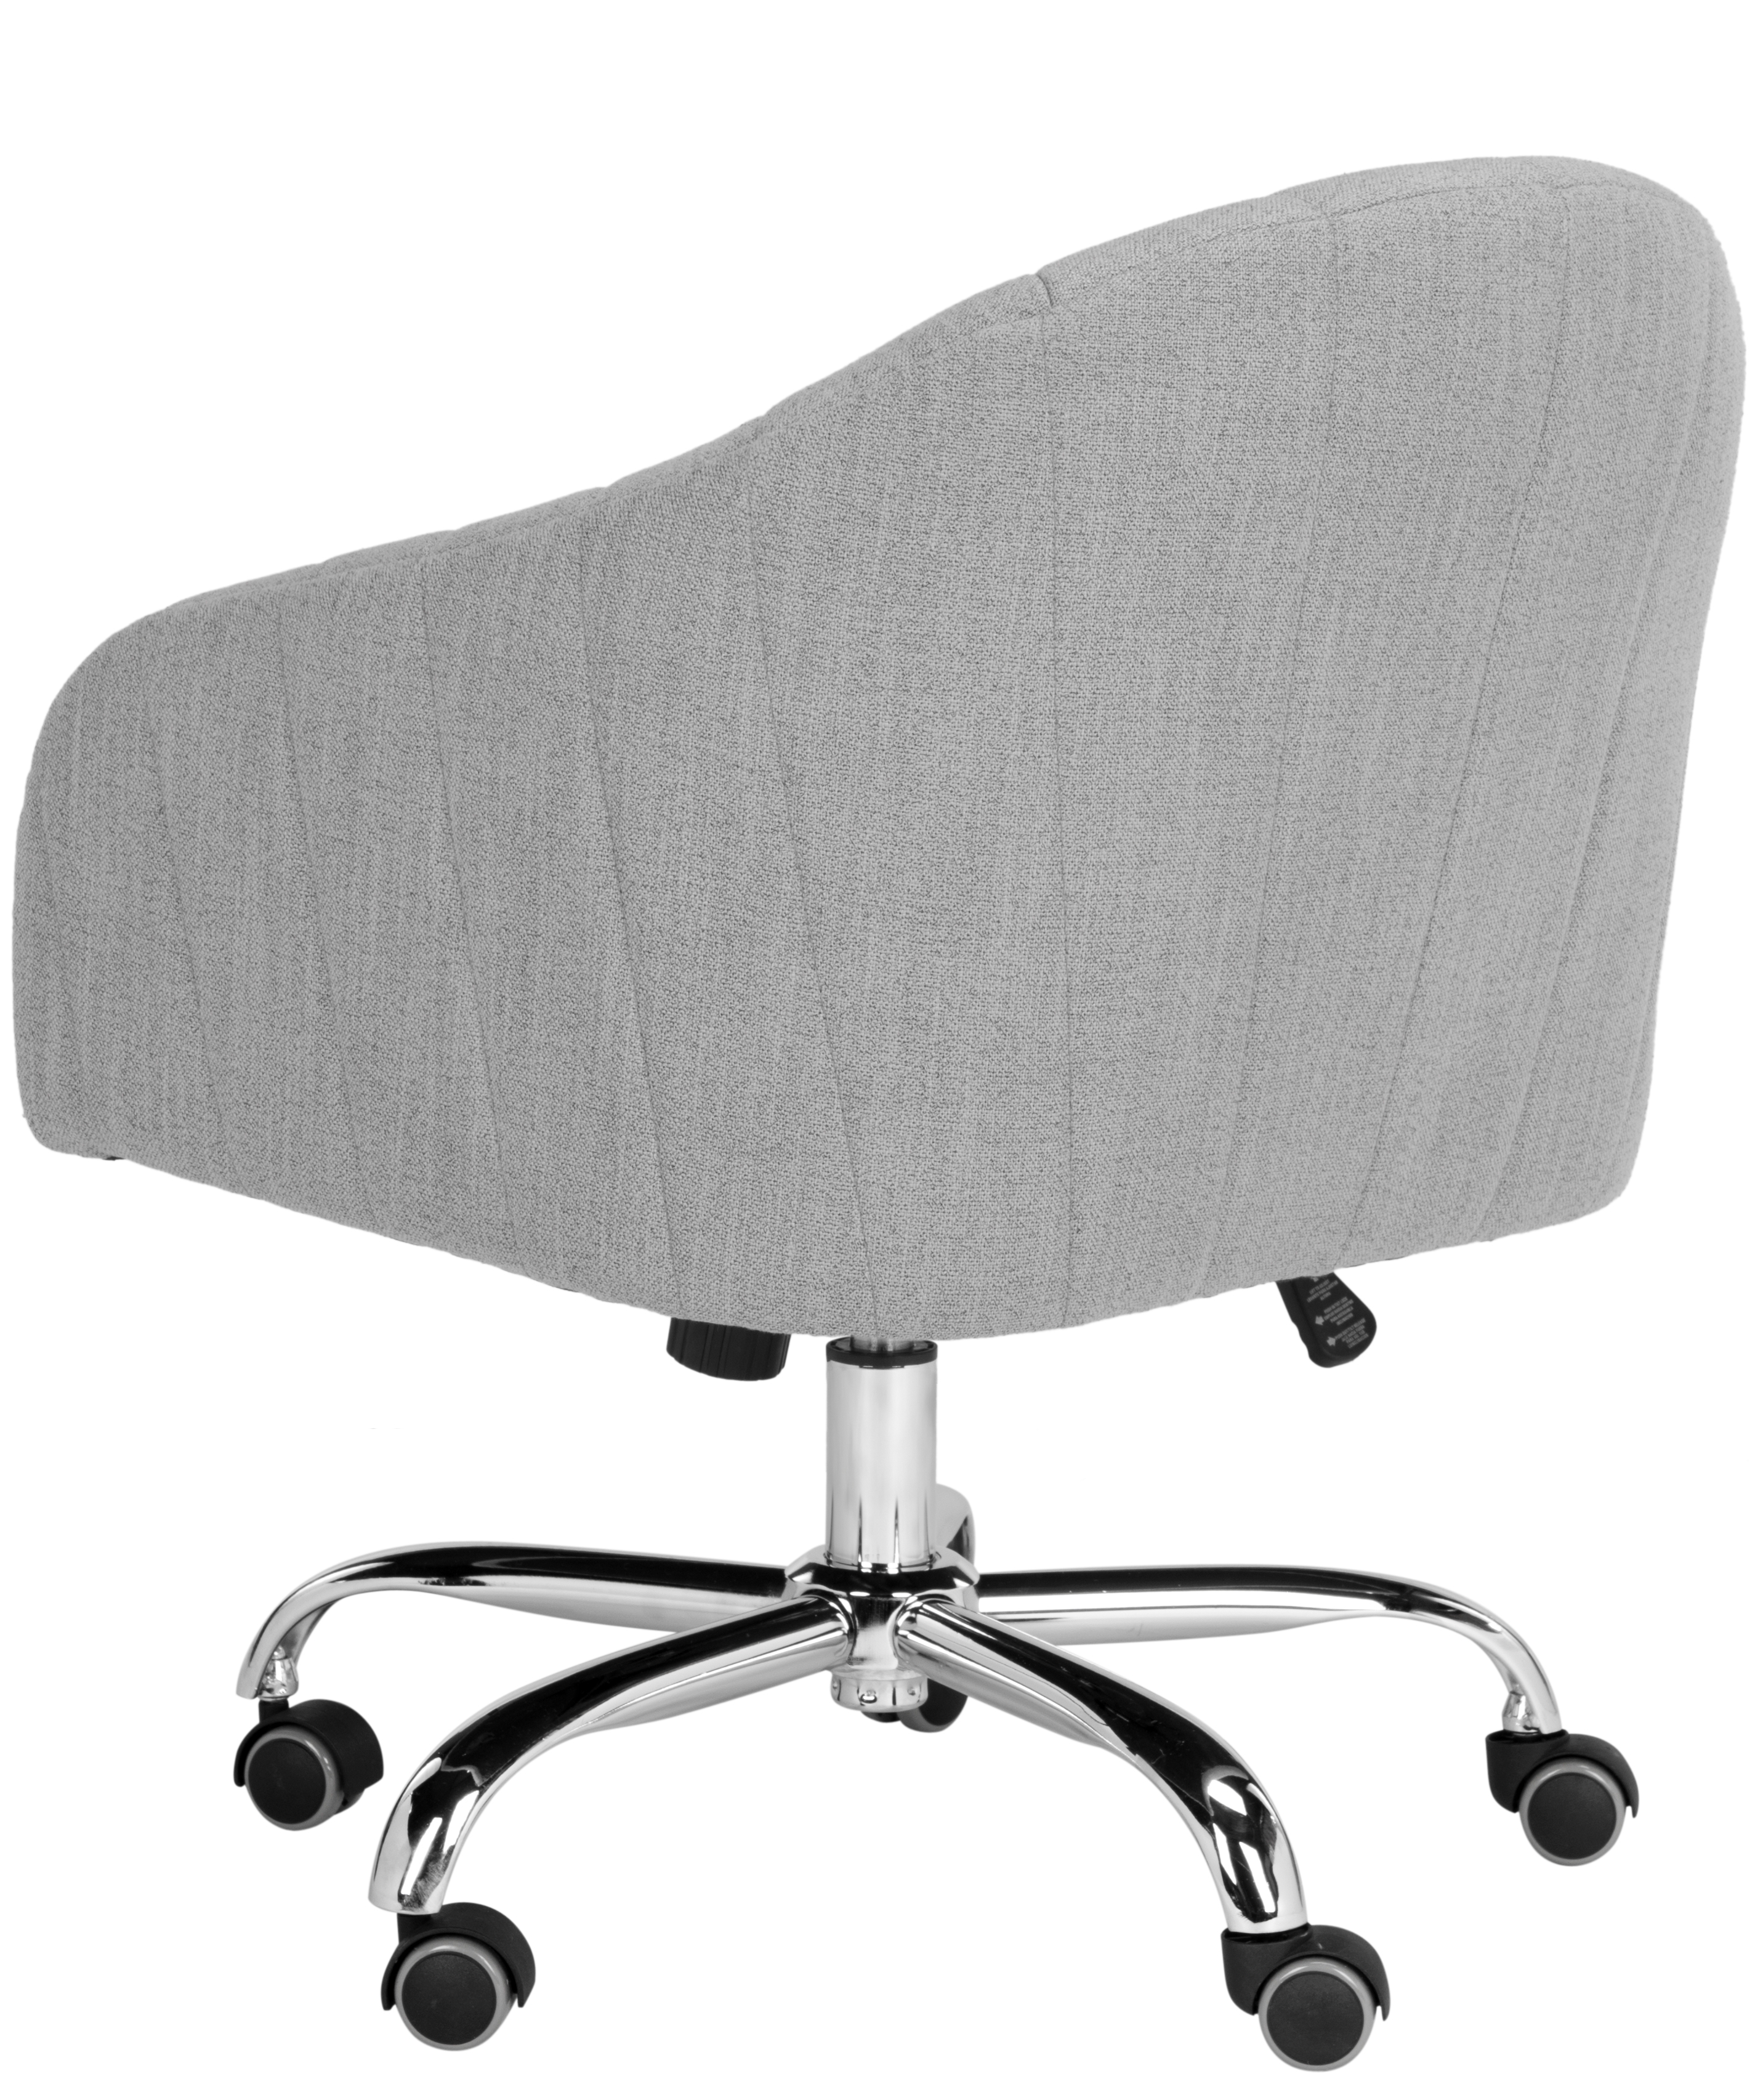 Themis Linen Chrome Leg Swivel Office Chair - Grey/Chrome - Arlo Home - Image 4